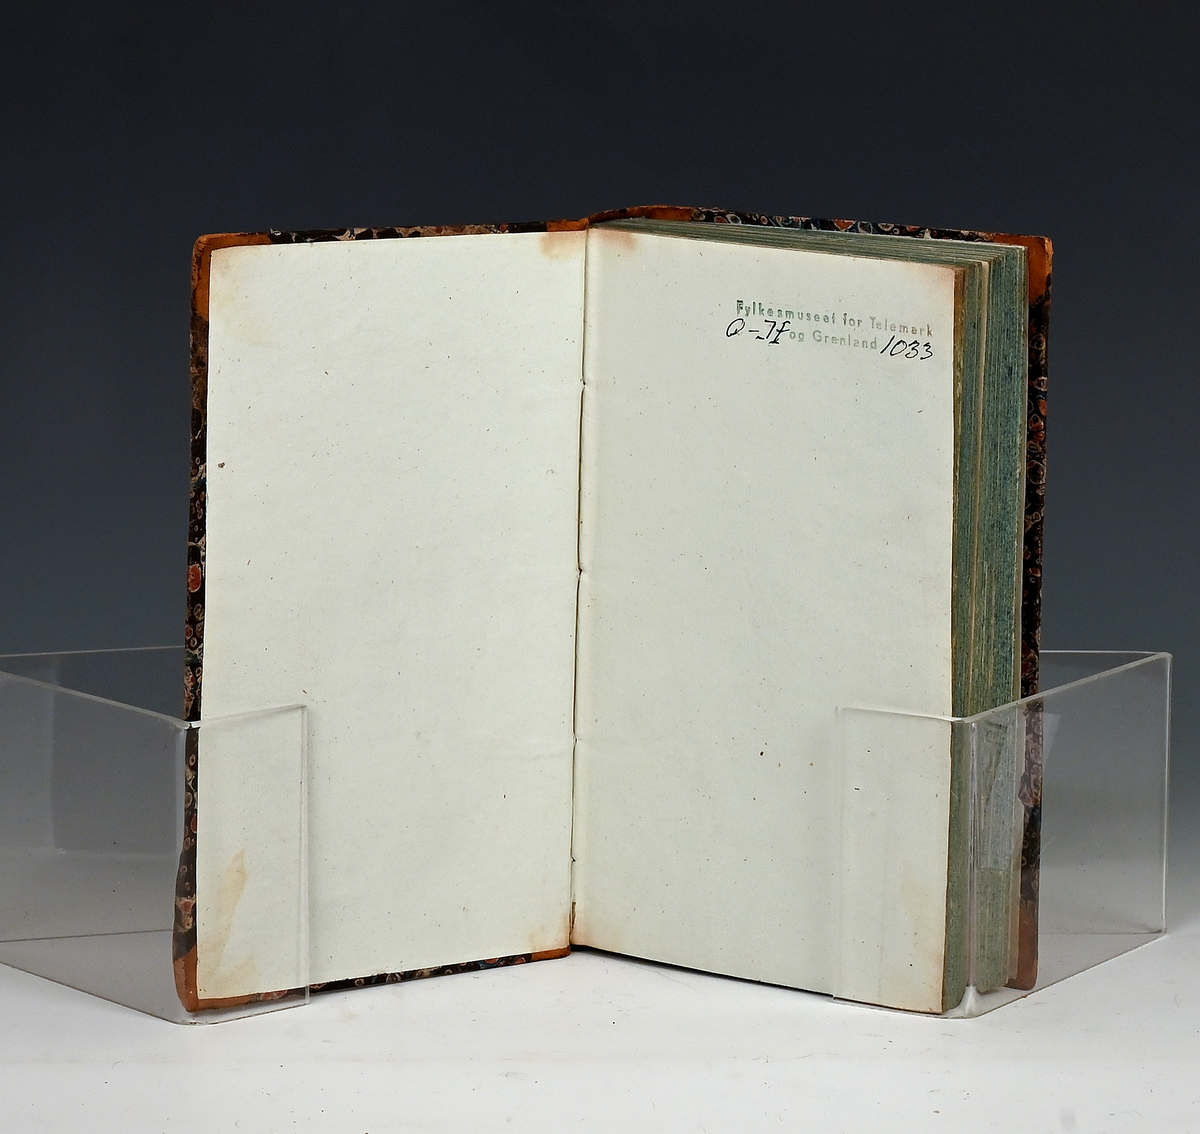 Maanedsskrift for litteratur. Tiende bind. Kbhv. 1833.